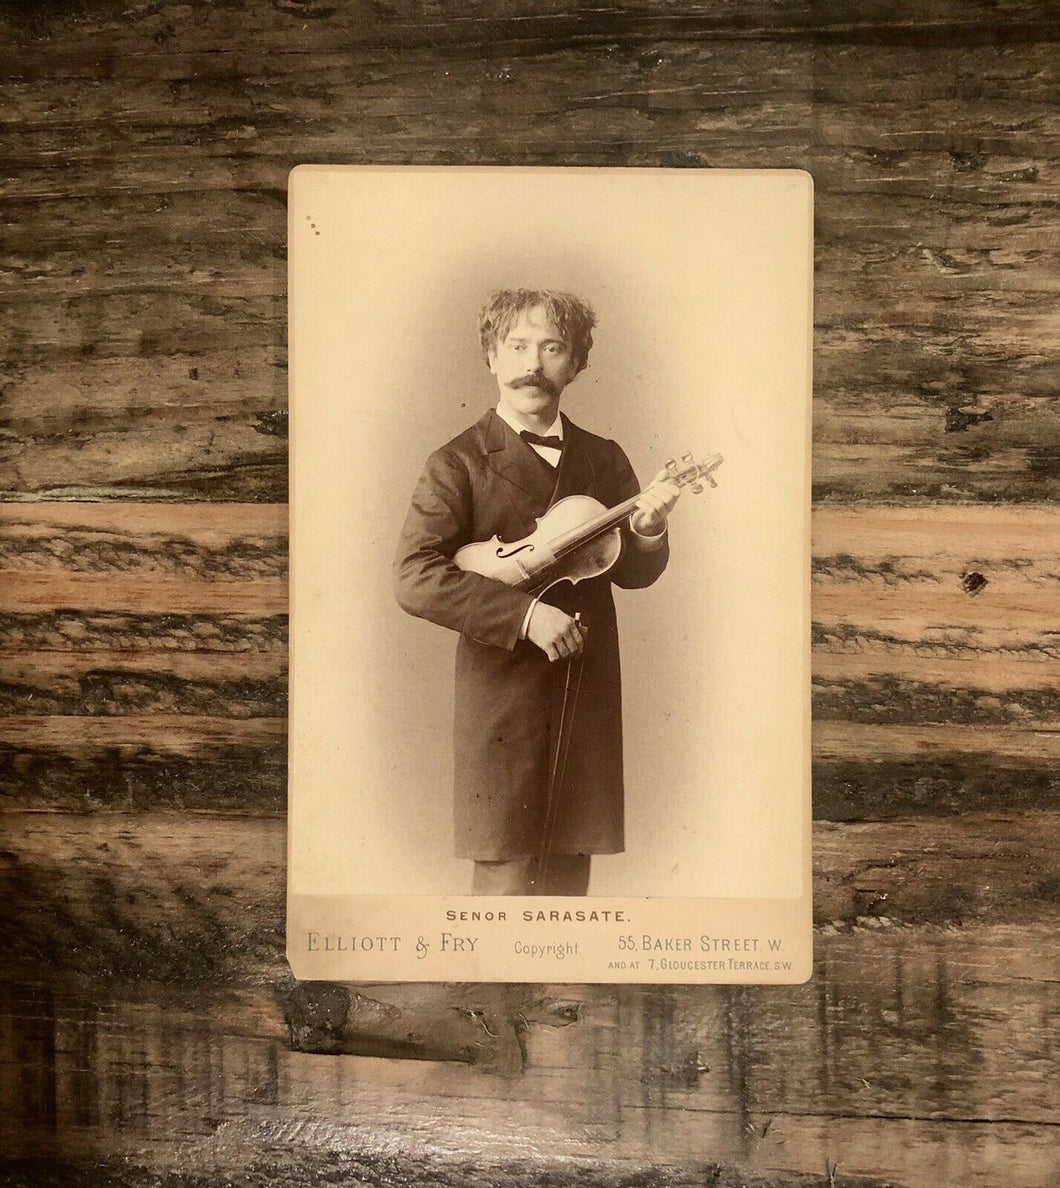 Rare Photo Musician Violinist PABLO DE SARASATE VIOLINIST / 1800s Violin Player